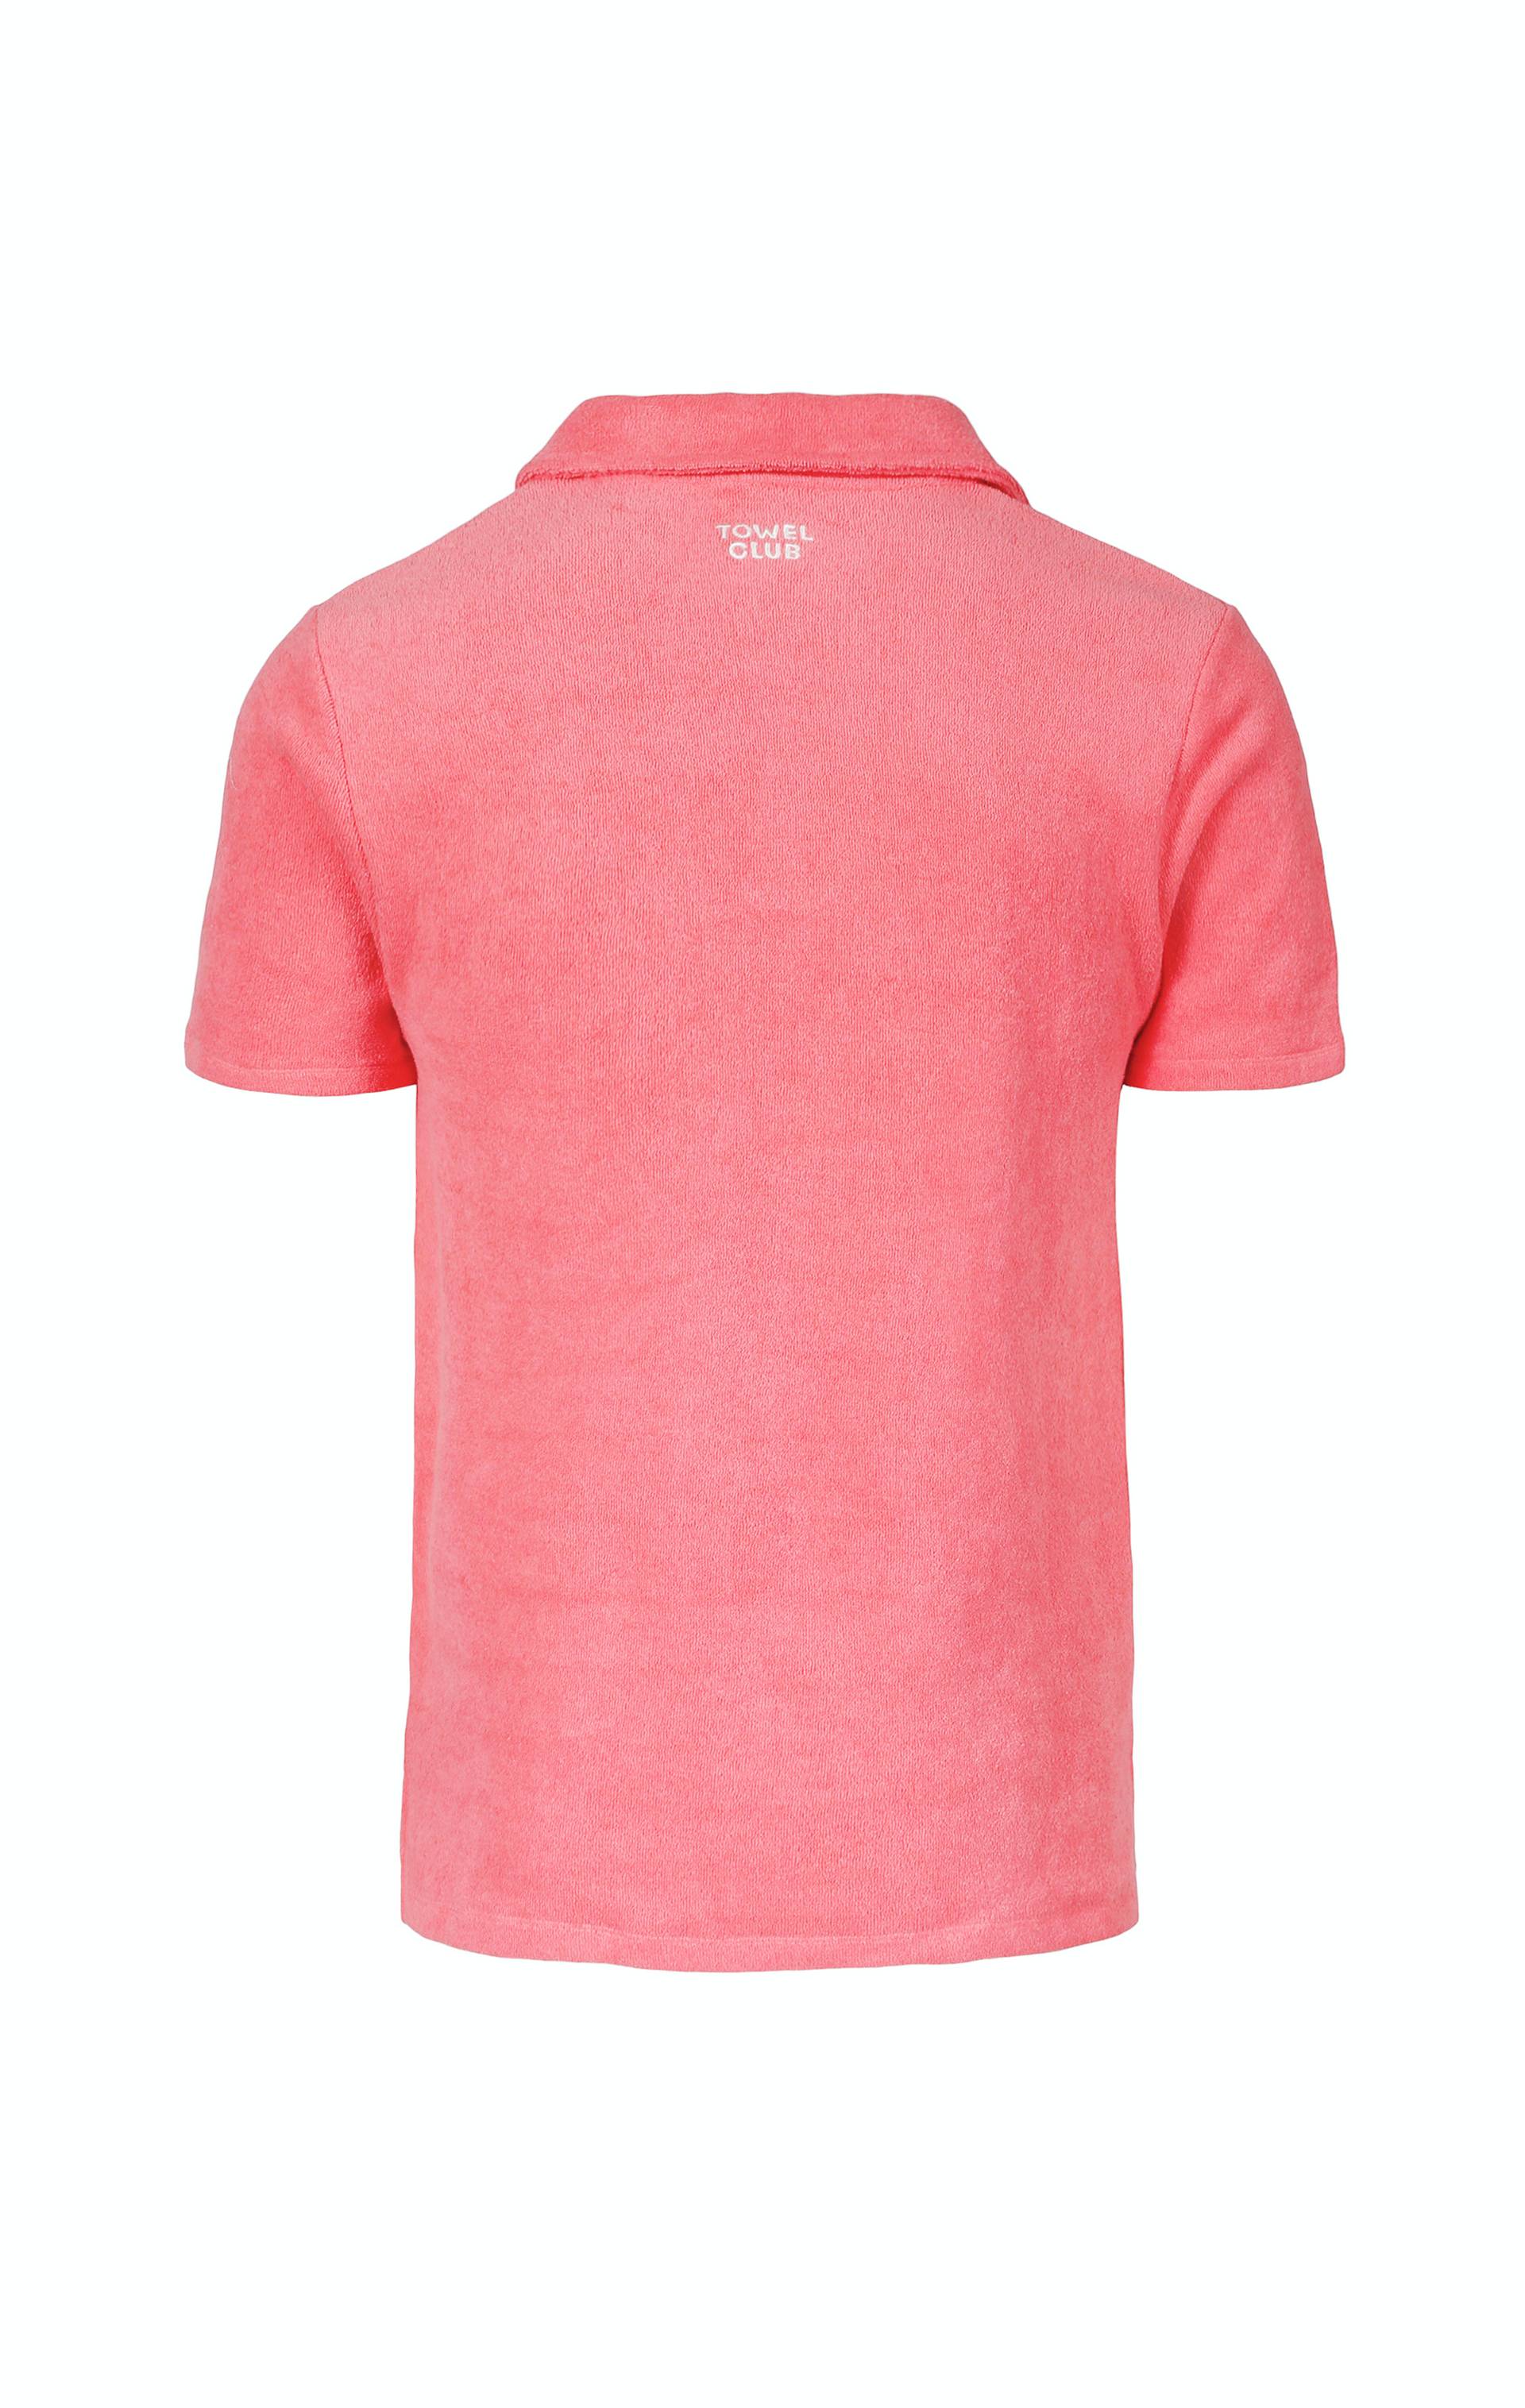 Onepiece Towel Club Piquet Shirt Coral - 5